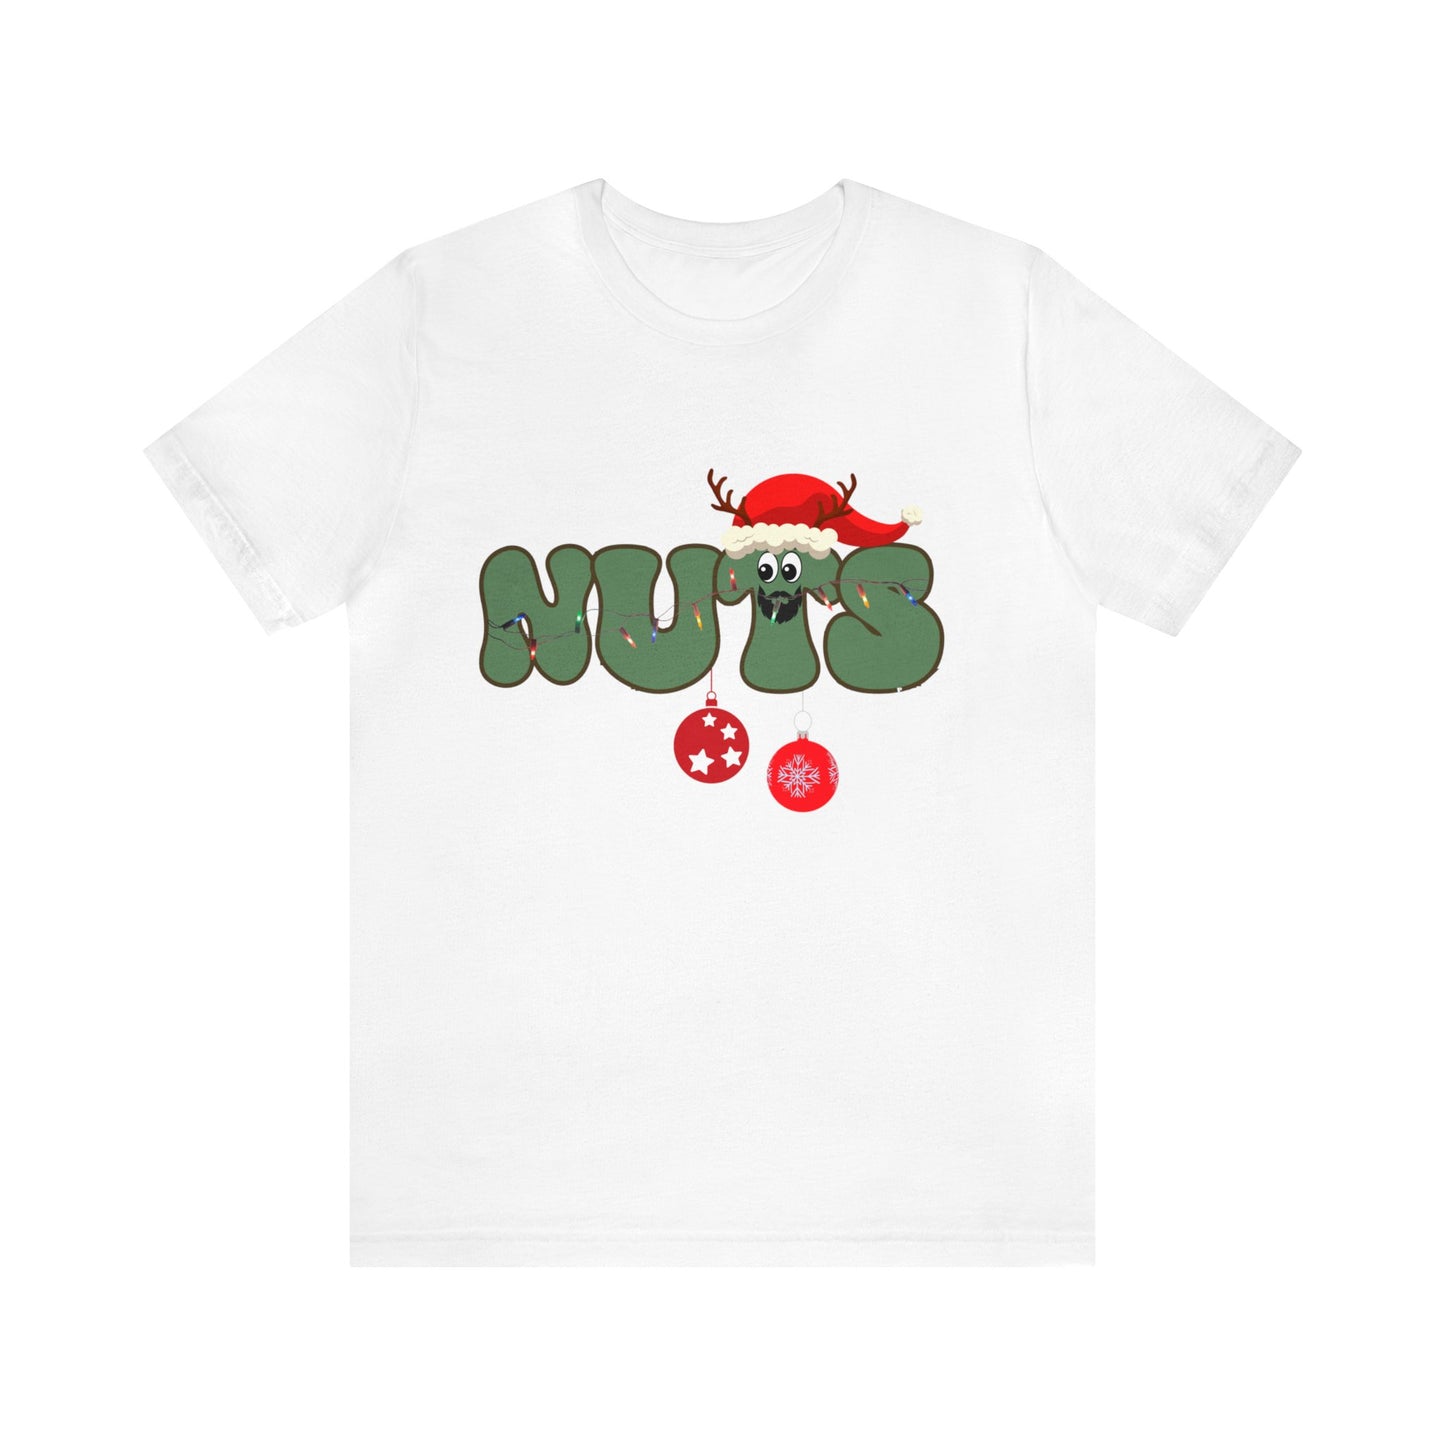 Couple Chest Nuts Shirt, Christmas Holiday T shirt, Christmas Gift for Couples, Funny Matching Christmas Shirt, T949